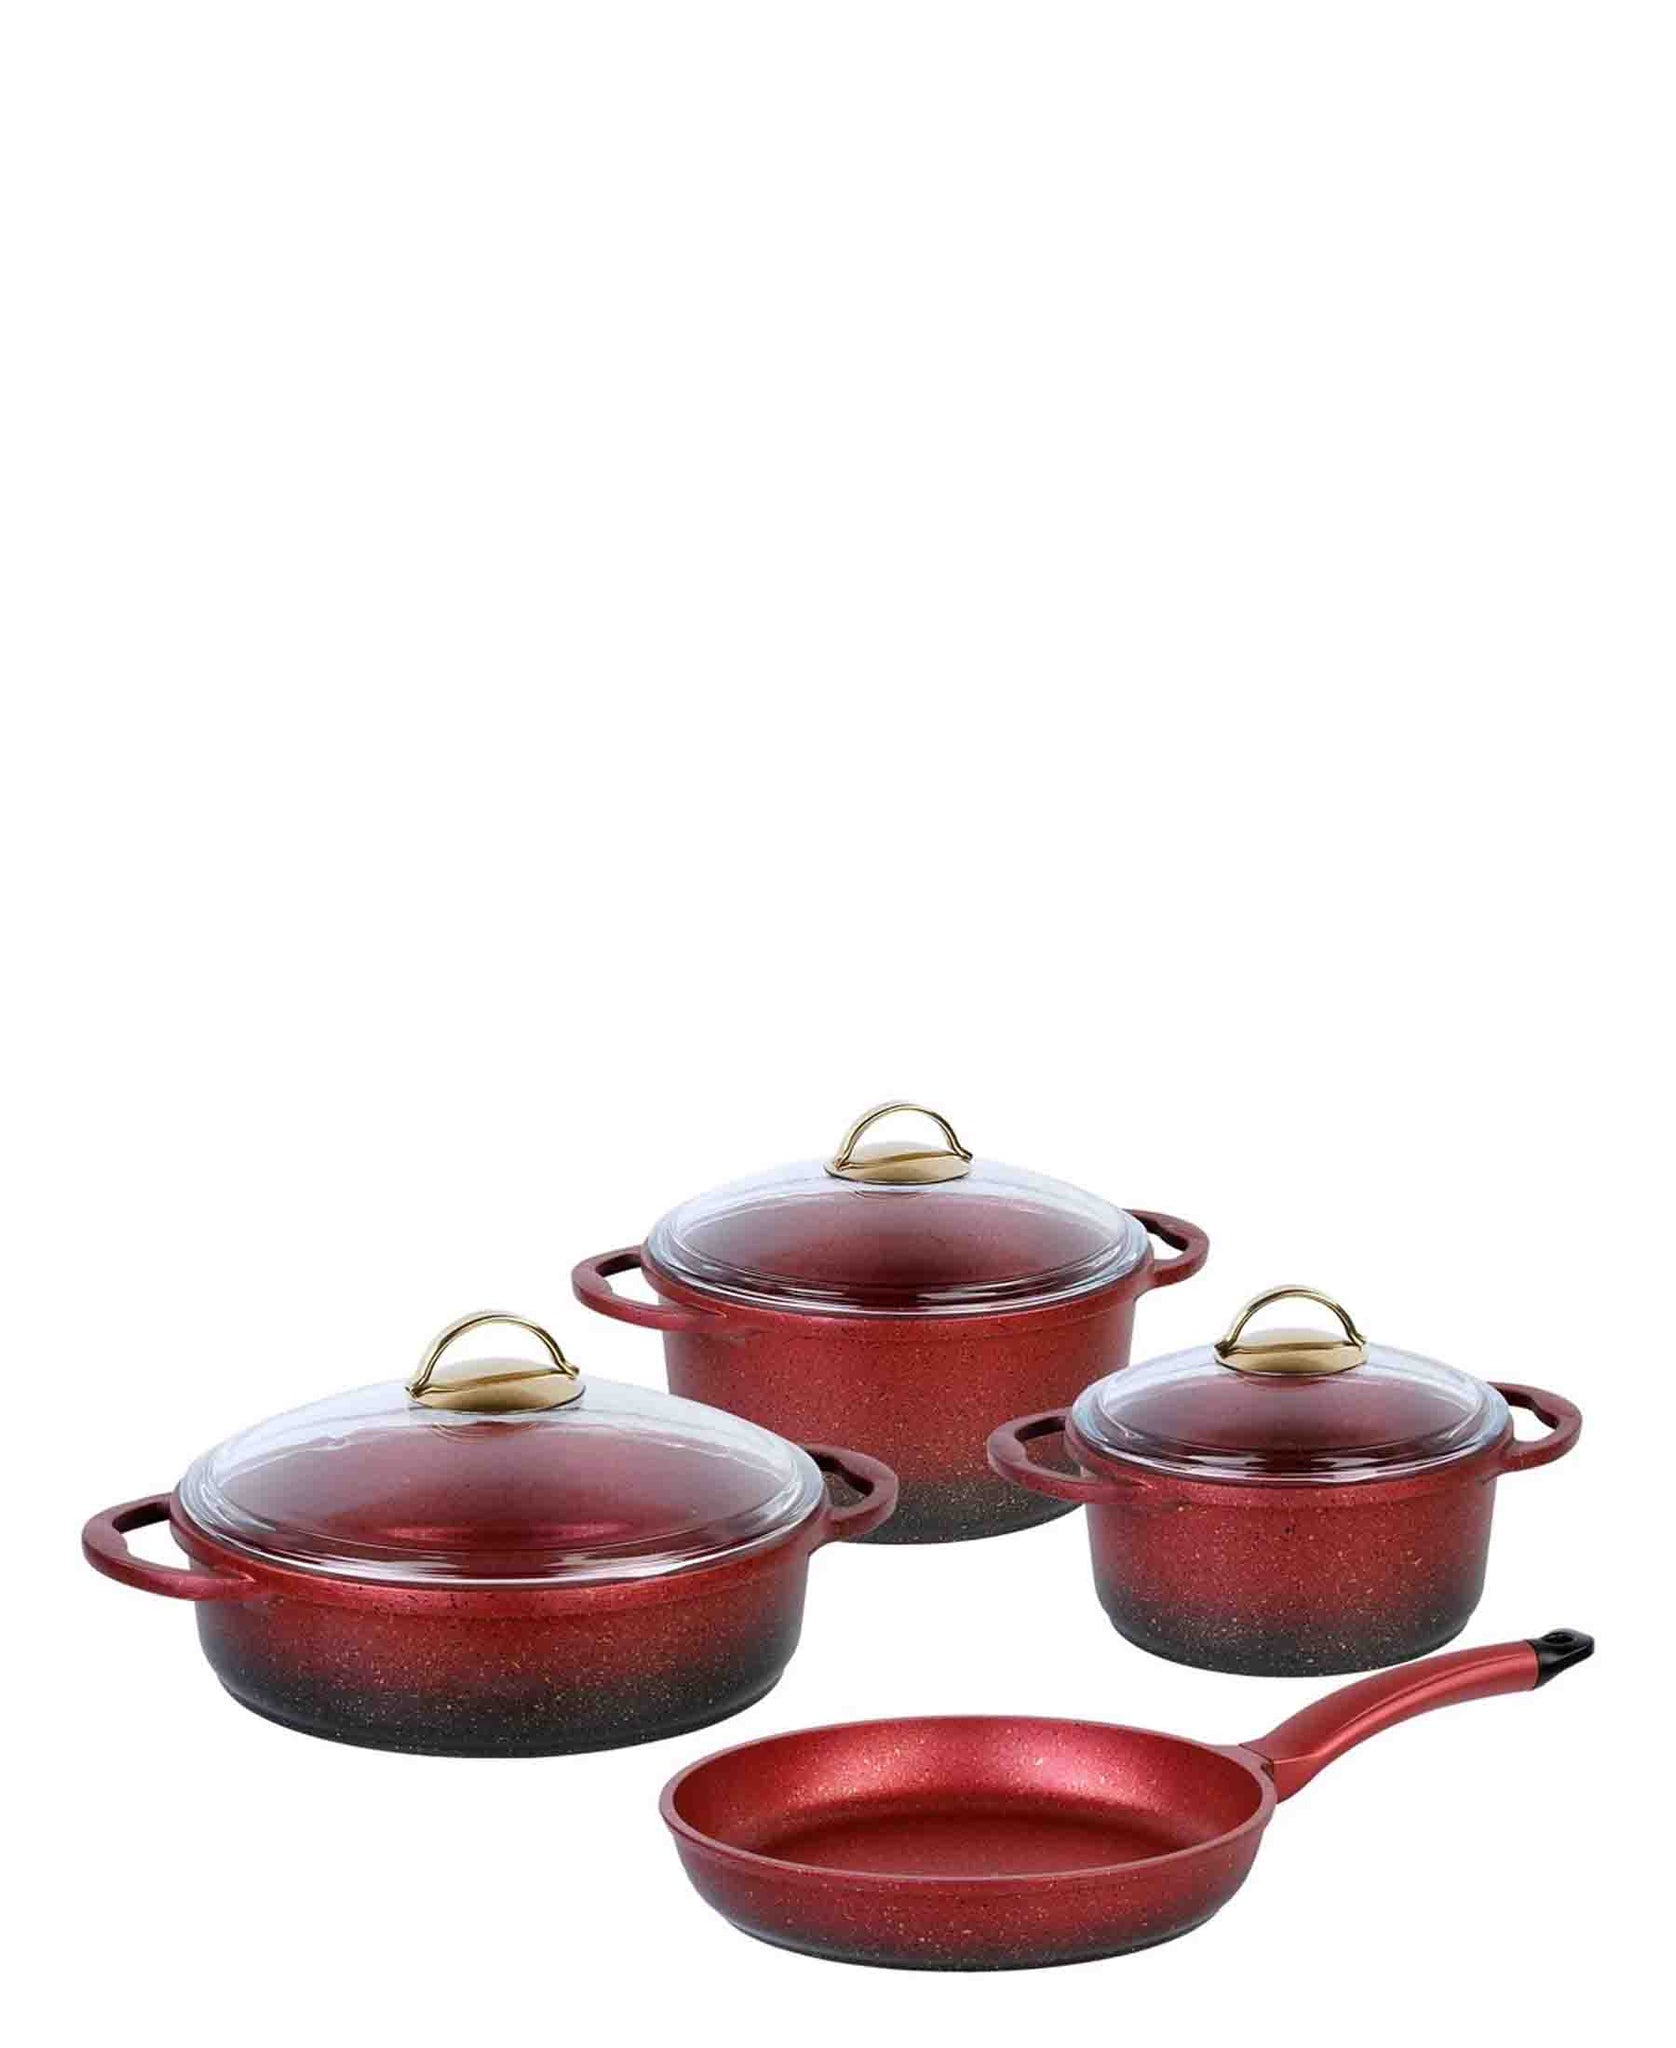 OMS 7 Piece Granite Cookware Pot Set - Red